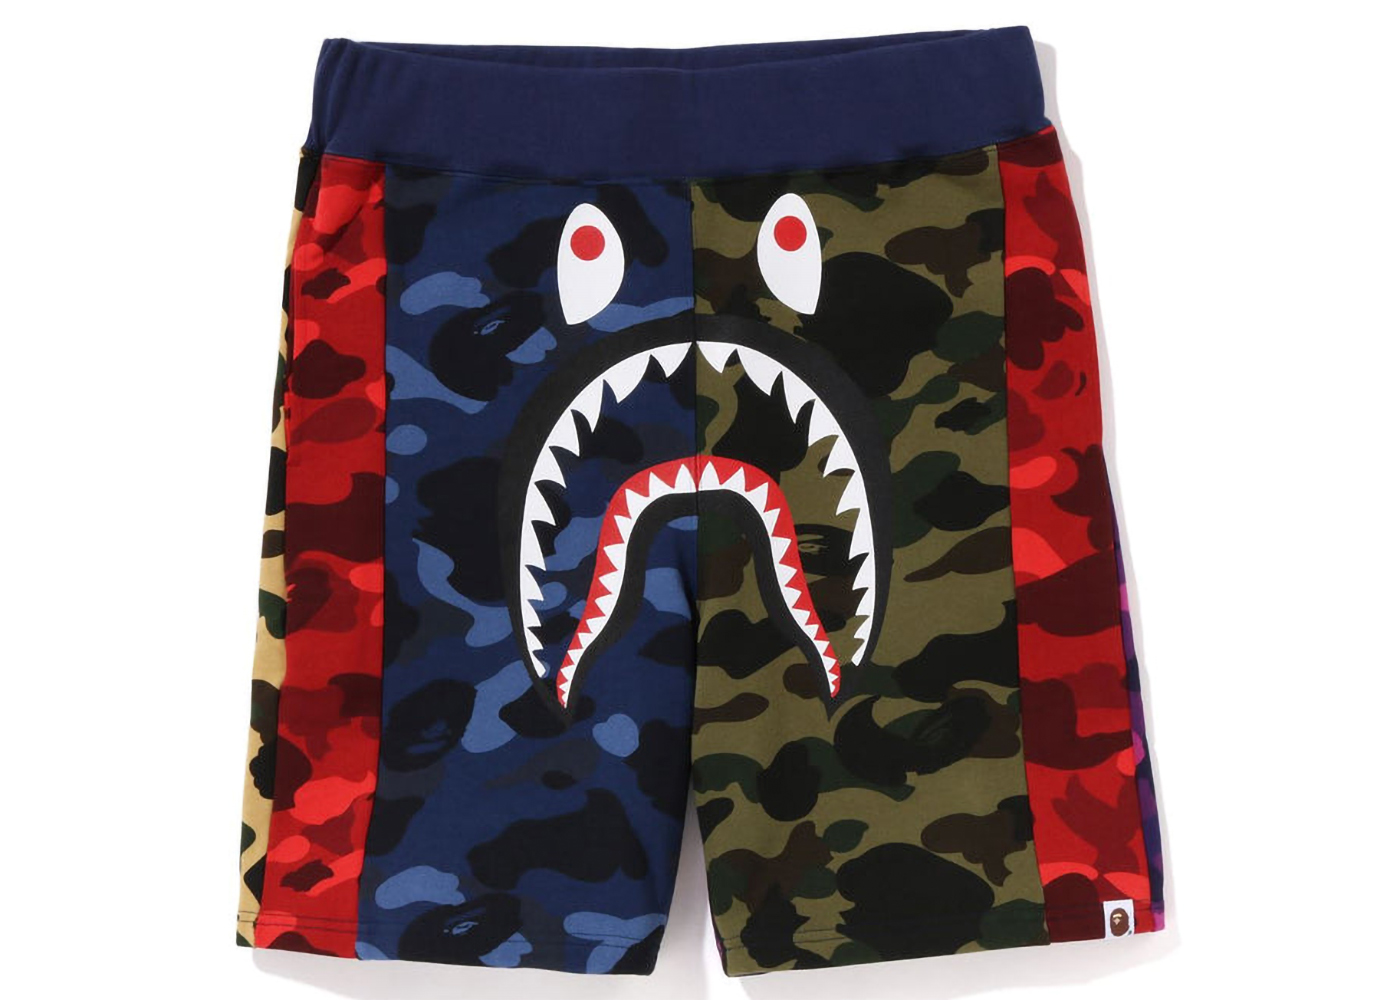 bape shark pants - Gem